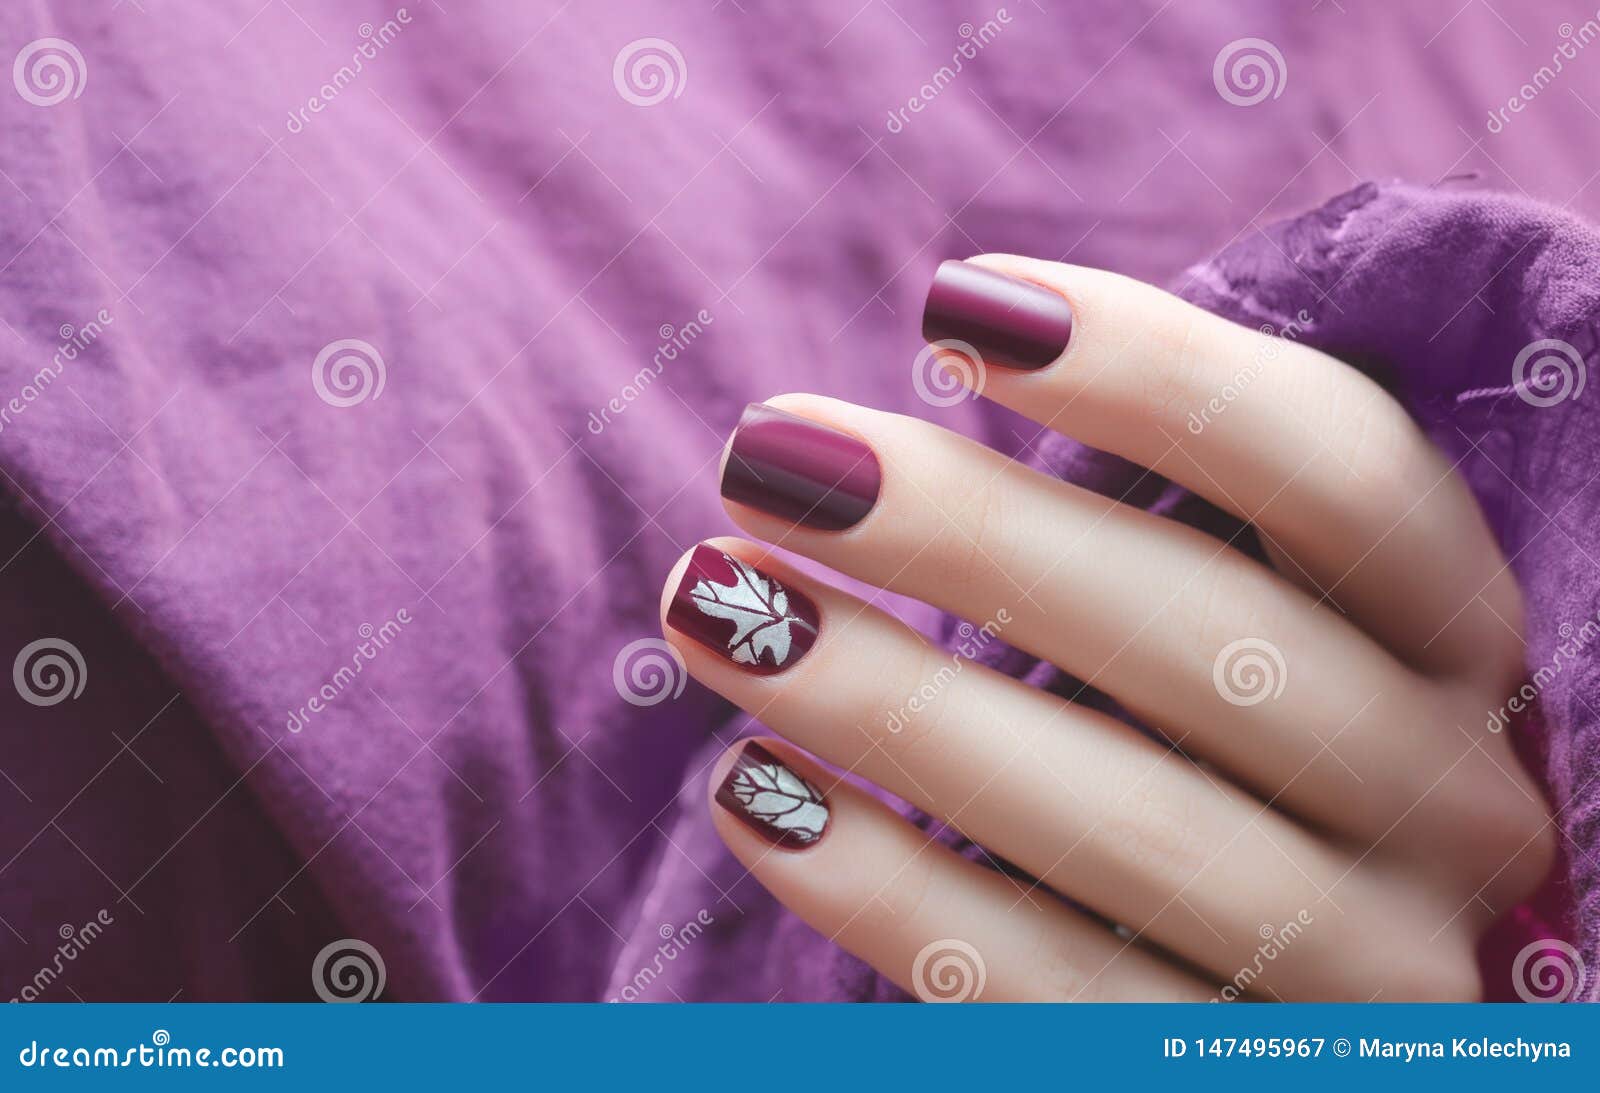 1. Elegant Purple and White Wedding Nail Design - wide 10